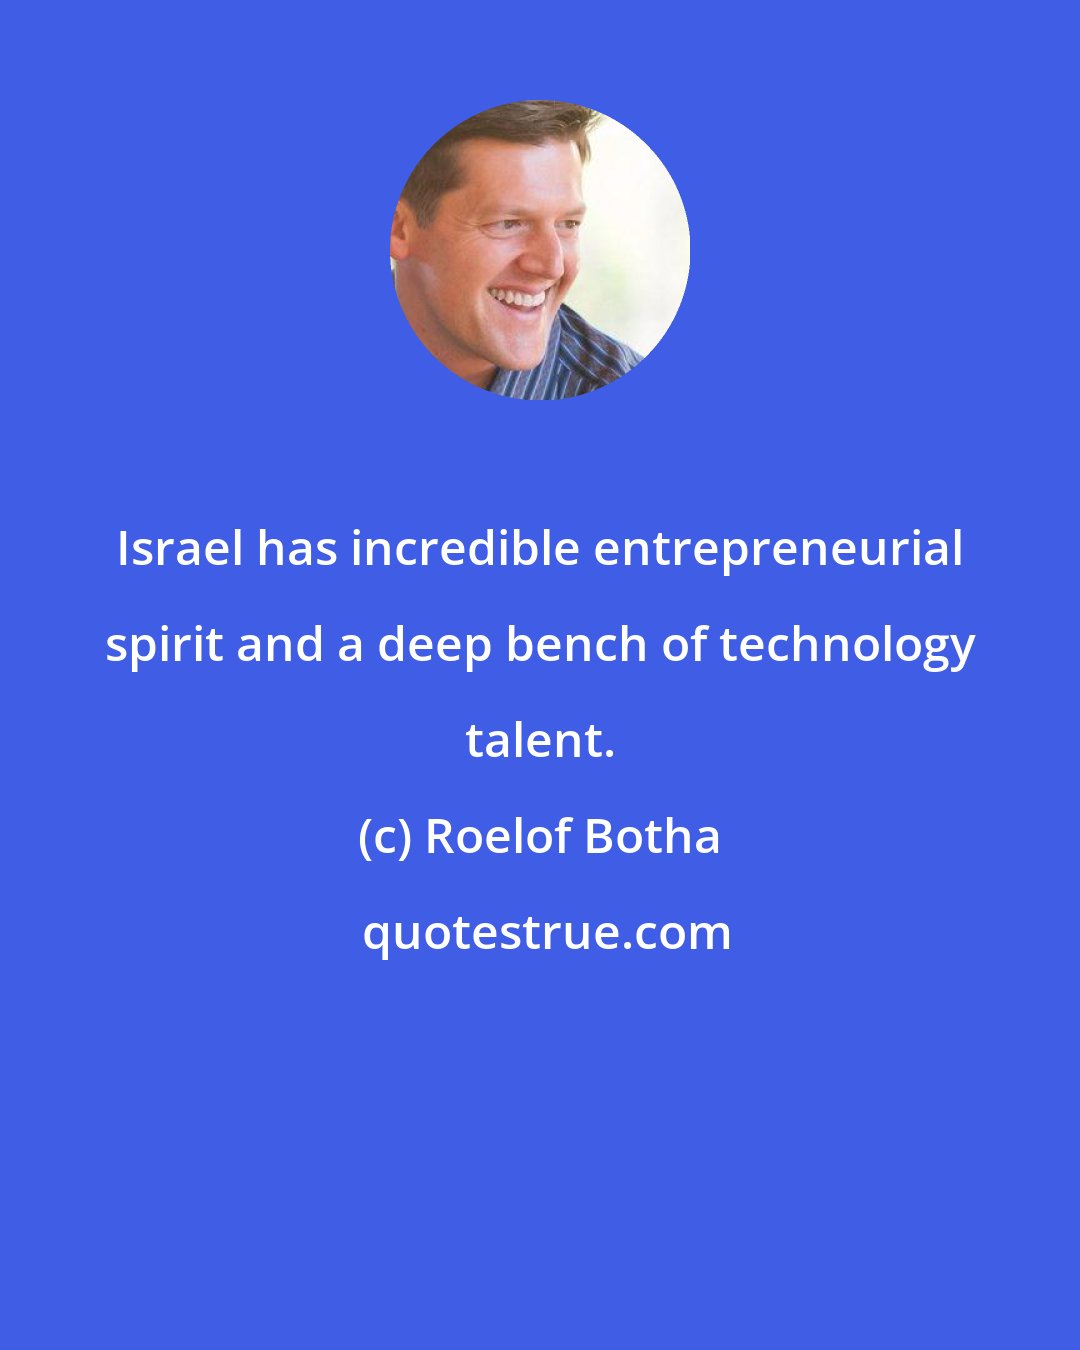 Roelof Botha: Israel has incredible entrepreneurial spirit and a deep bench of technology talent.